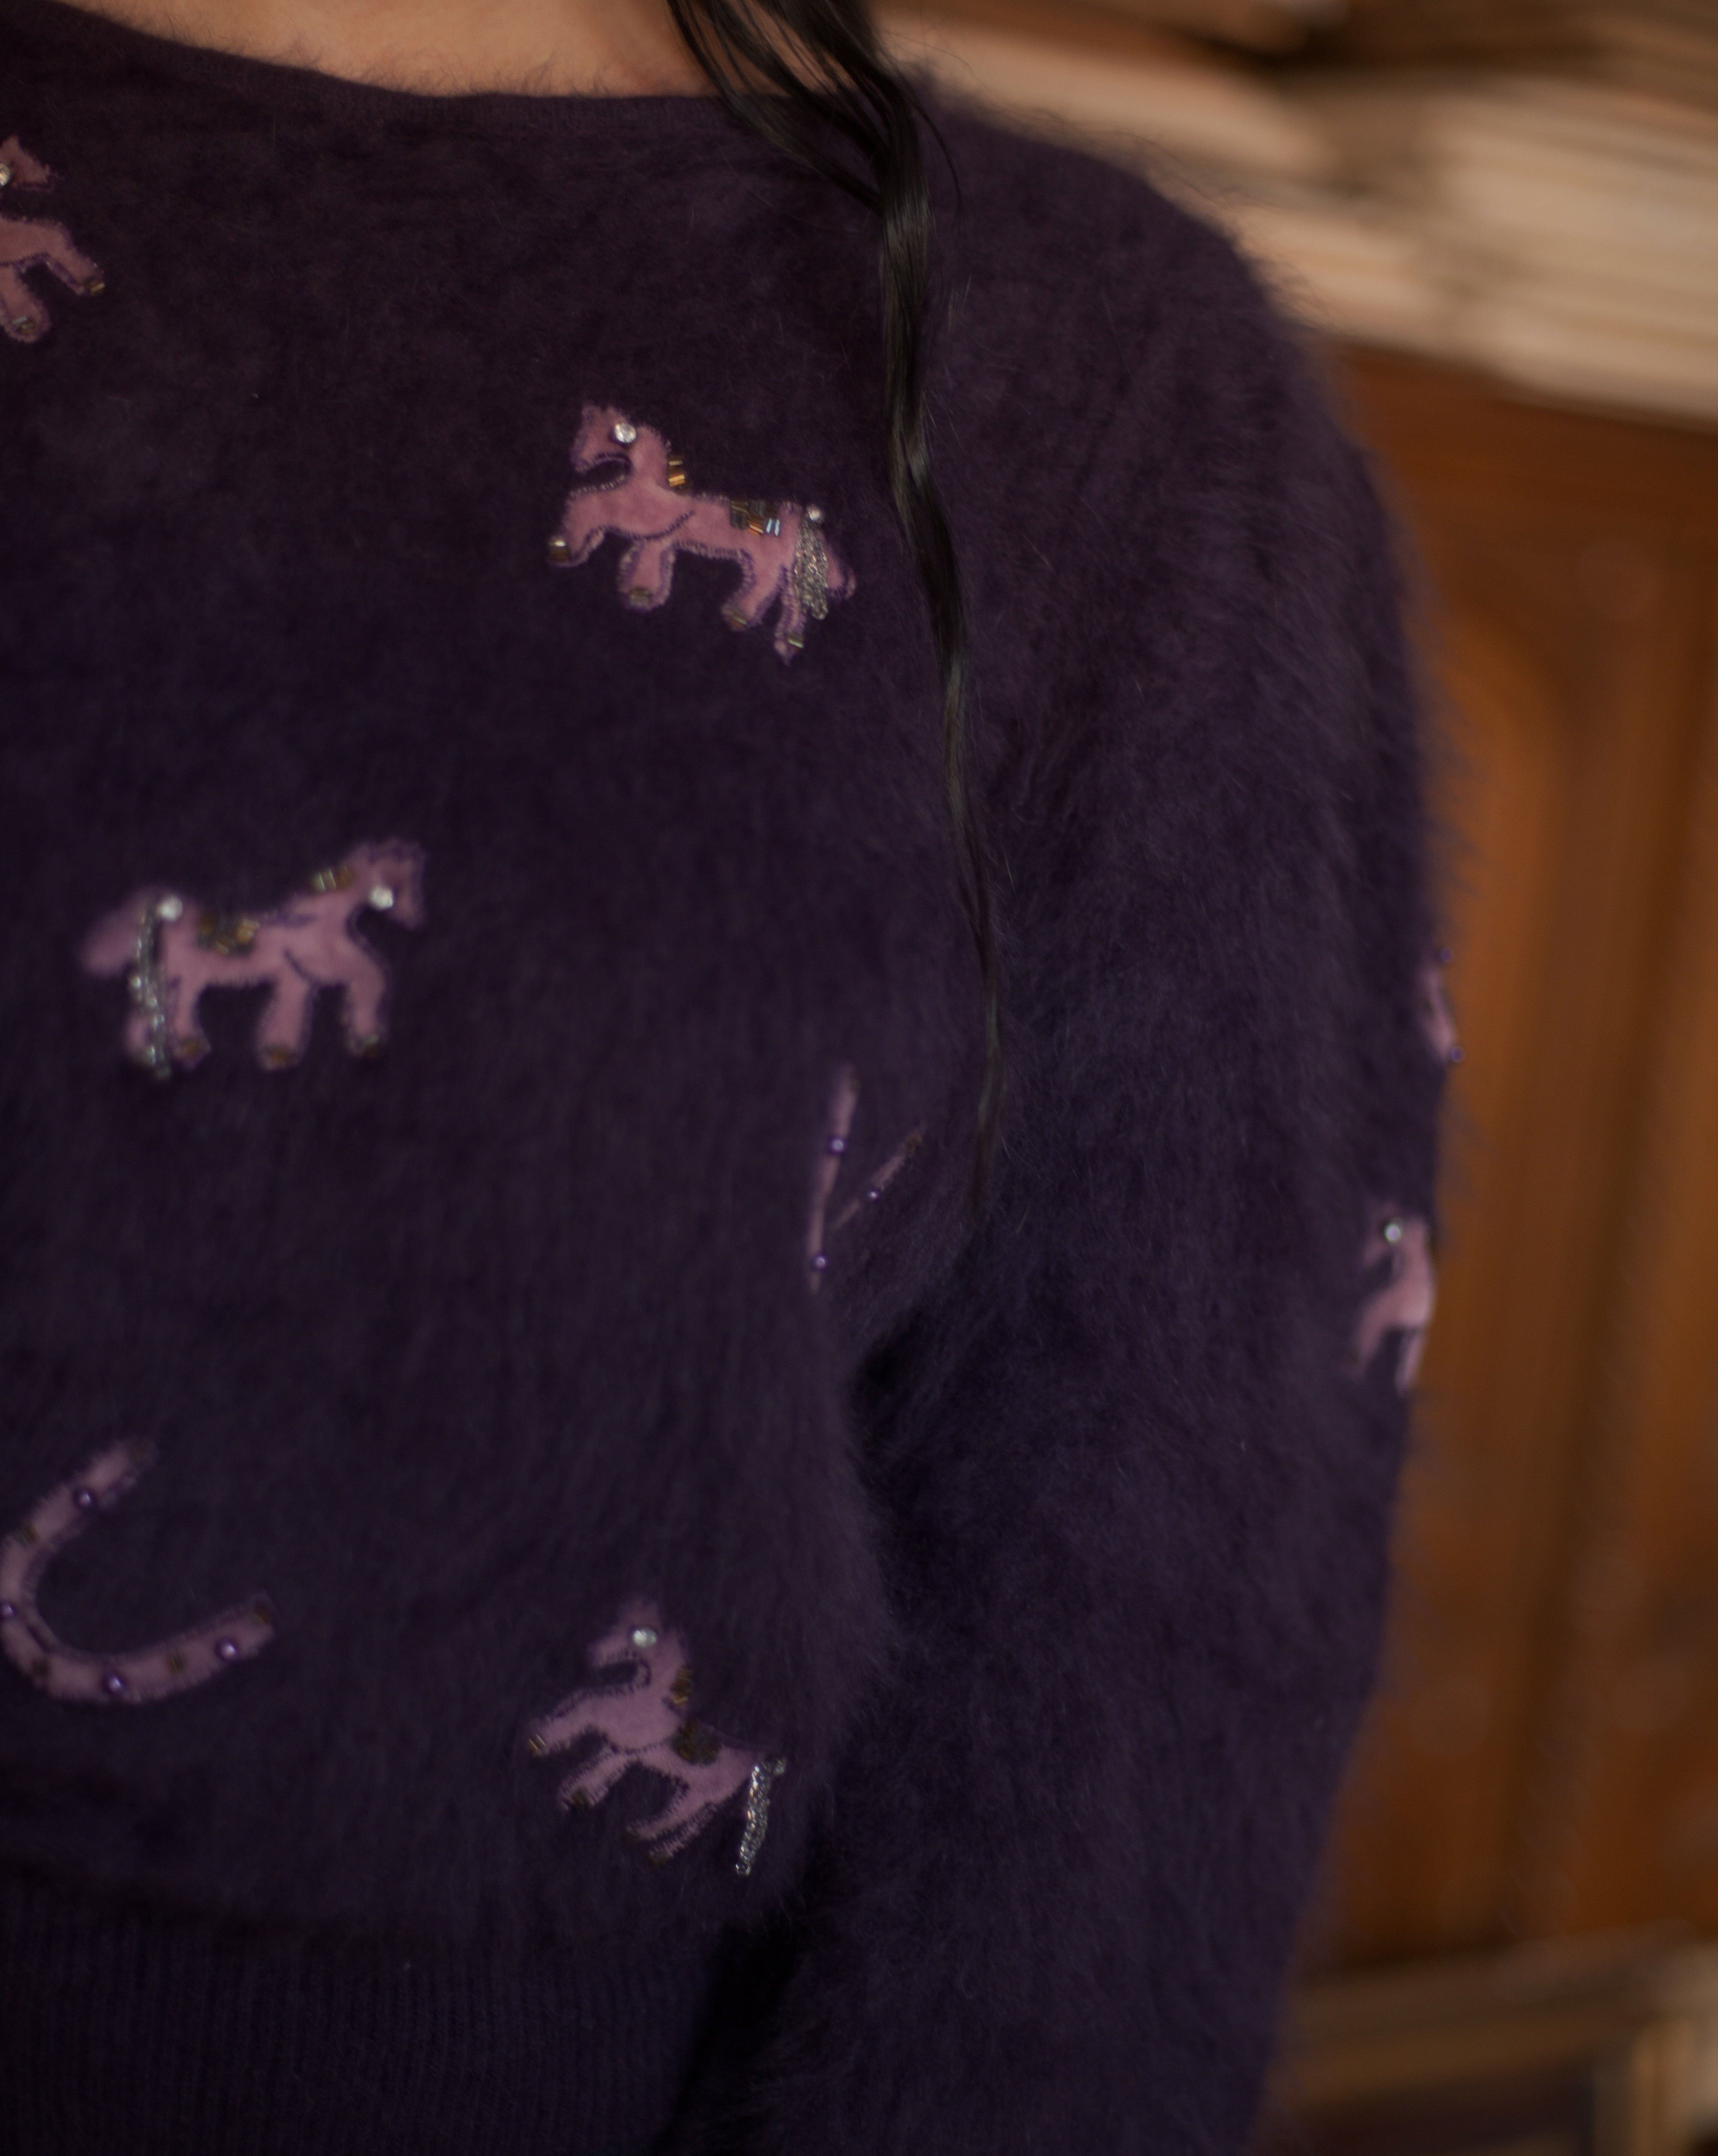 1980s angora puff sleeve horse appliqué sweater